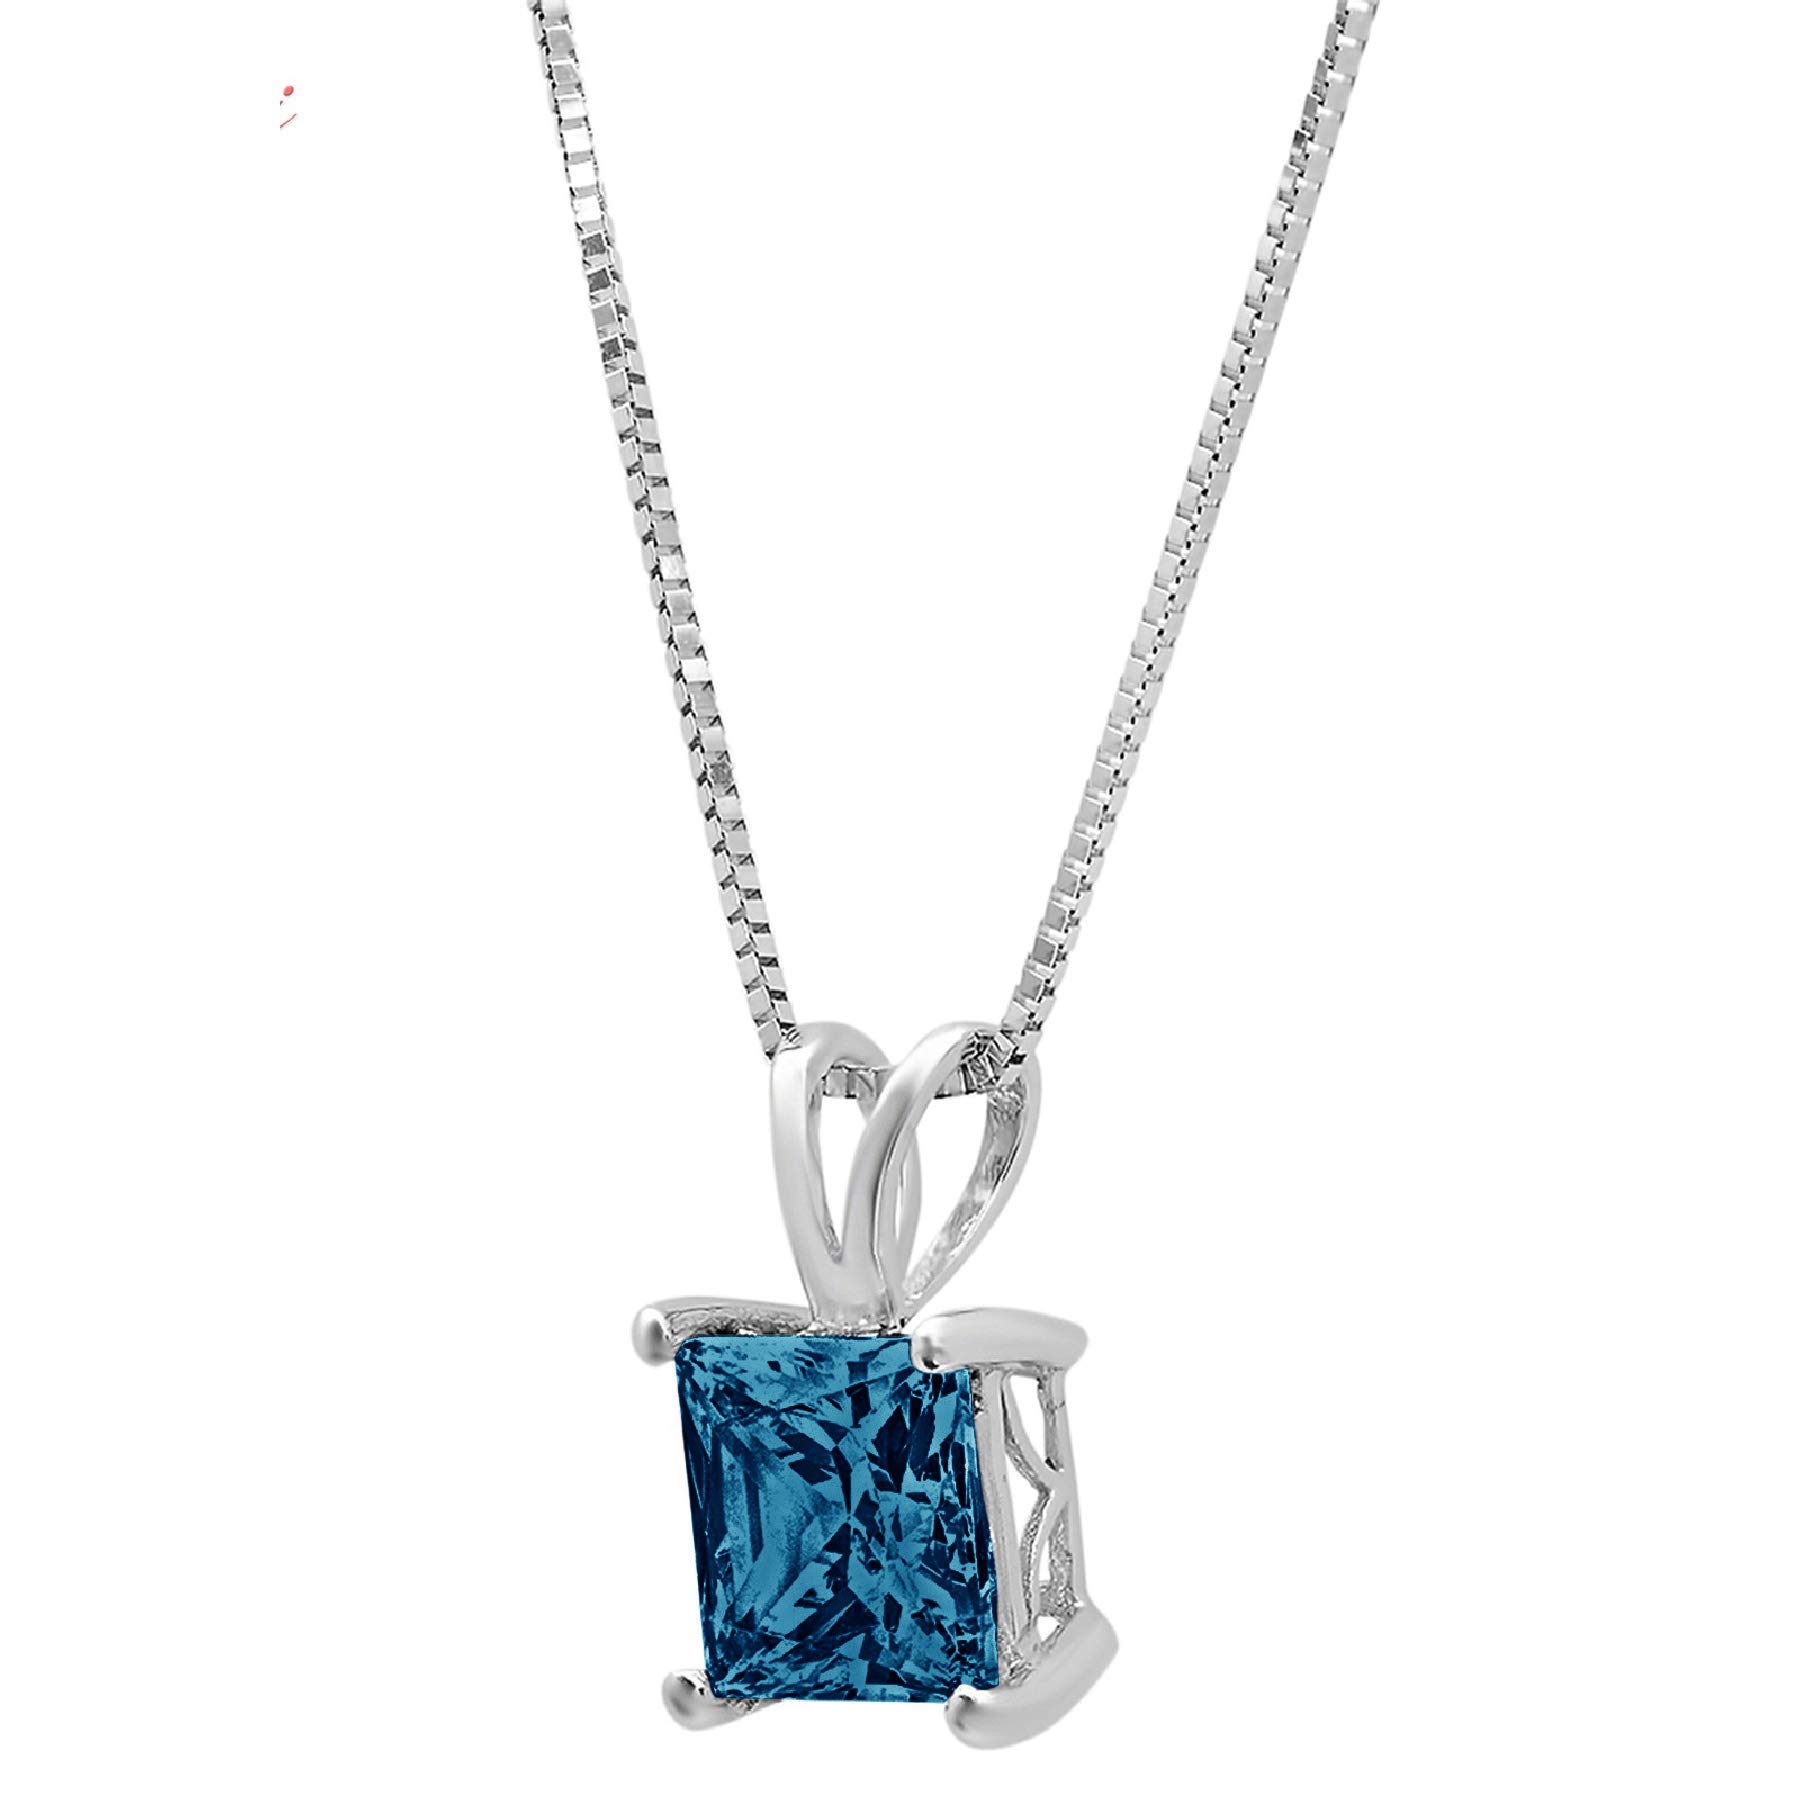 2.0 ct Brilliant Princess Cut Stunning Genuine Natural London Blue Topaz Ideal VVS1 D Solitaire Pendant Necklace With 16